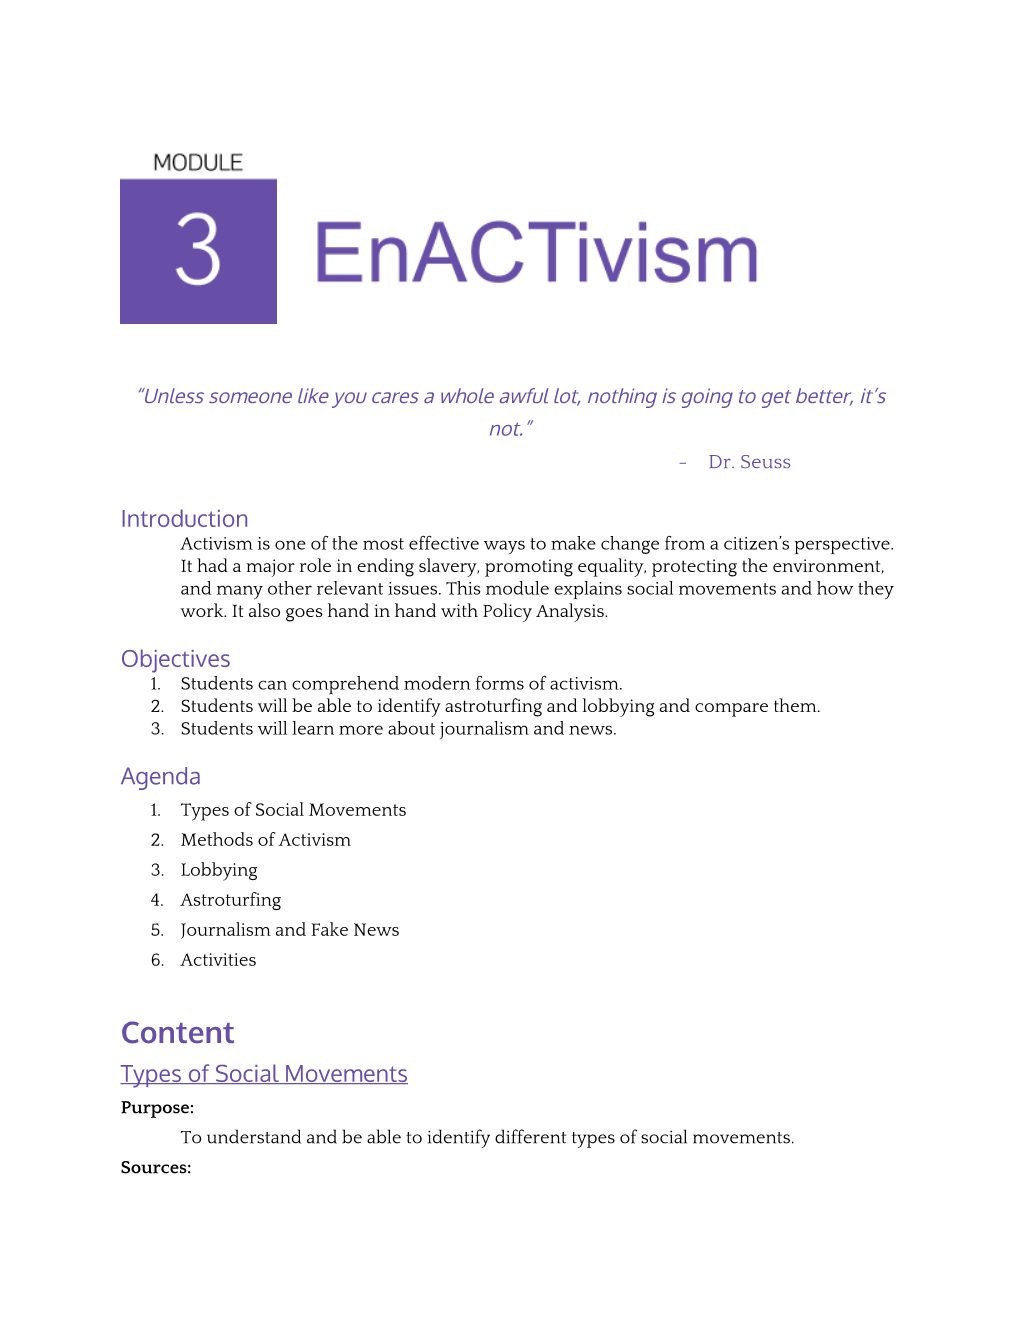 03. Enactivism